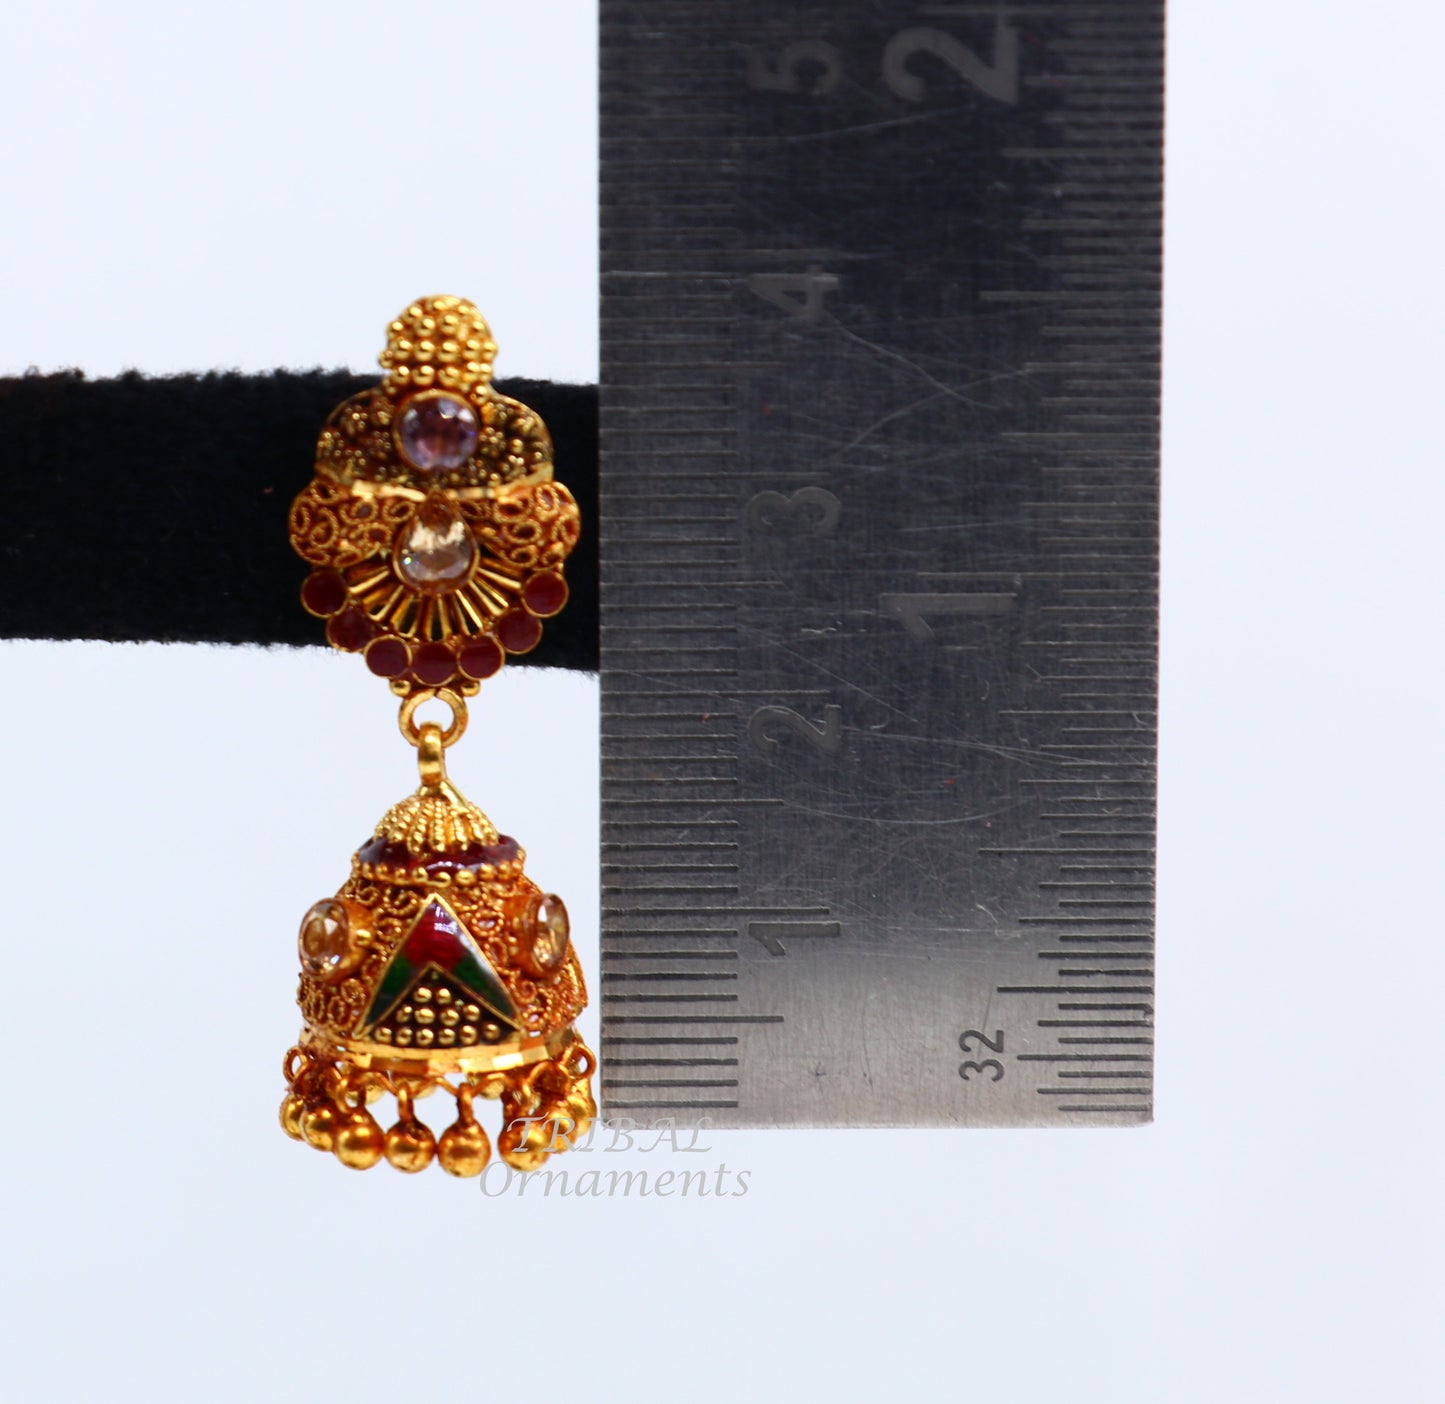 22k yellow gold fabulous handmade filigree work antique designer stud earrings brides wedding jewelry from Rajasthan India er161 - TRIBAL ORNAMENTS